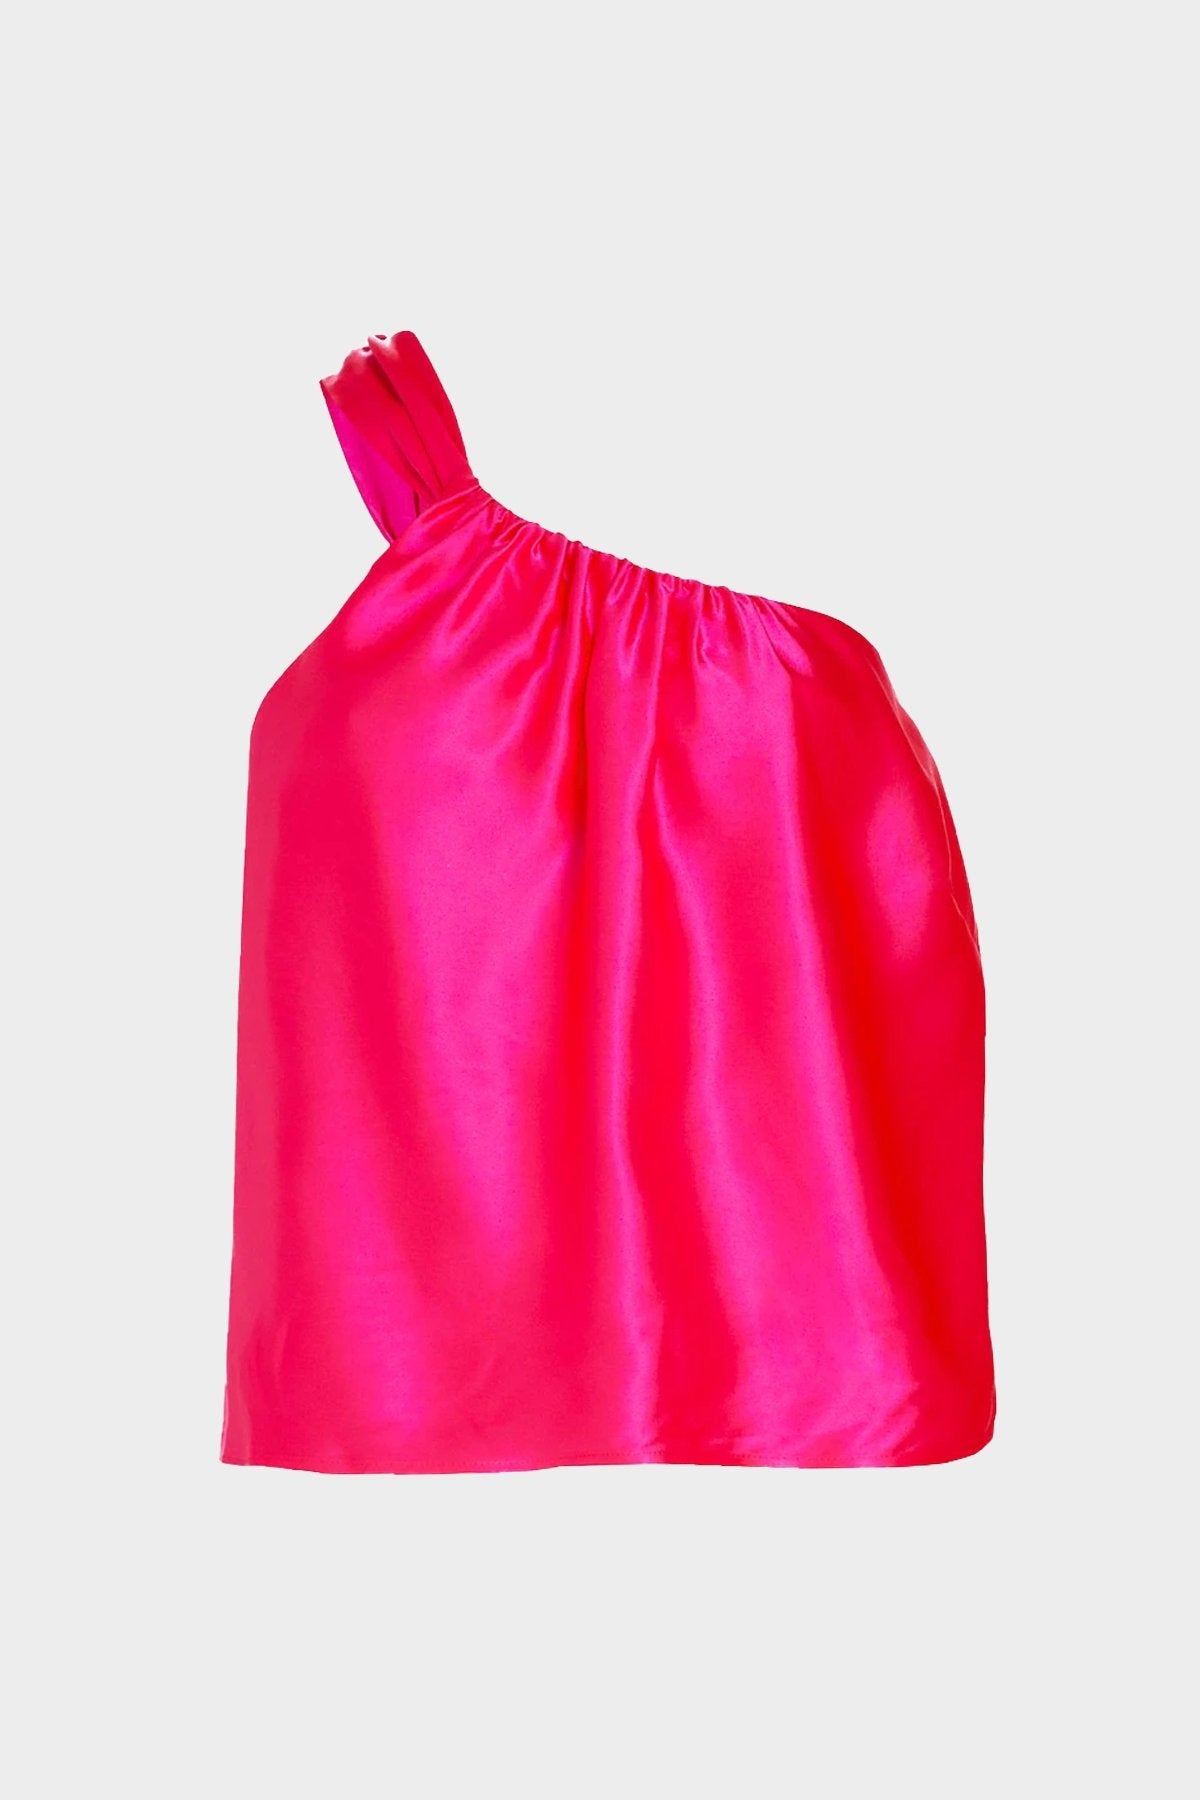 Asymmetric Strap Top in Hot Pink - shop-olivia.com